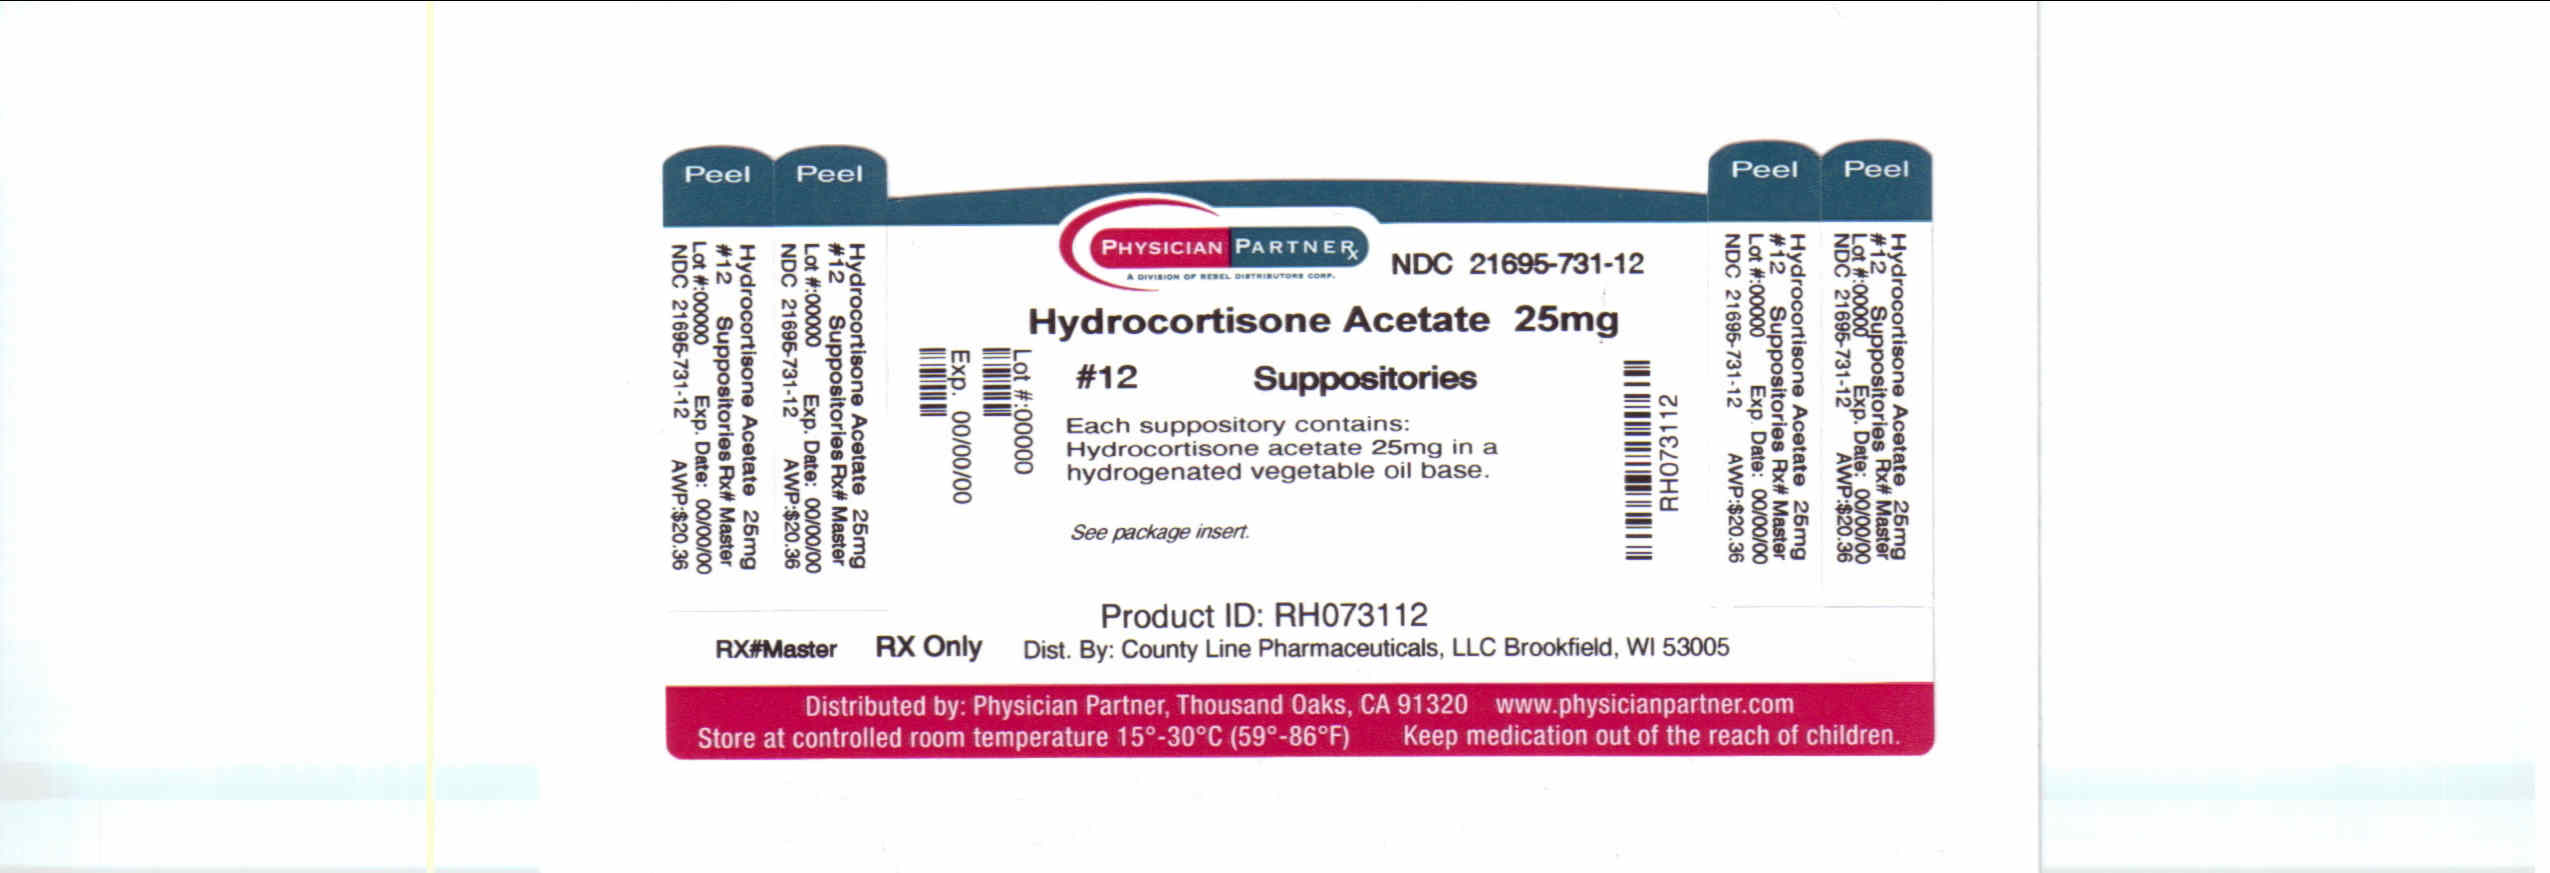 Hydrocortisone Acetate 25mg